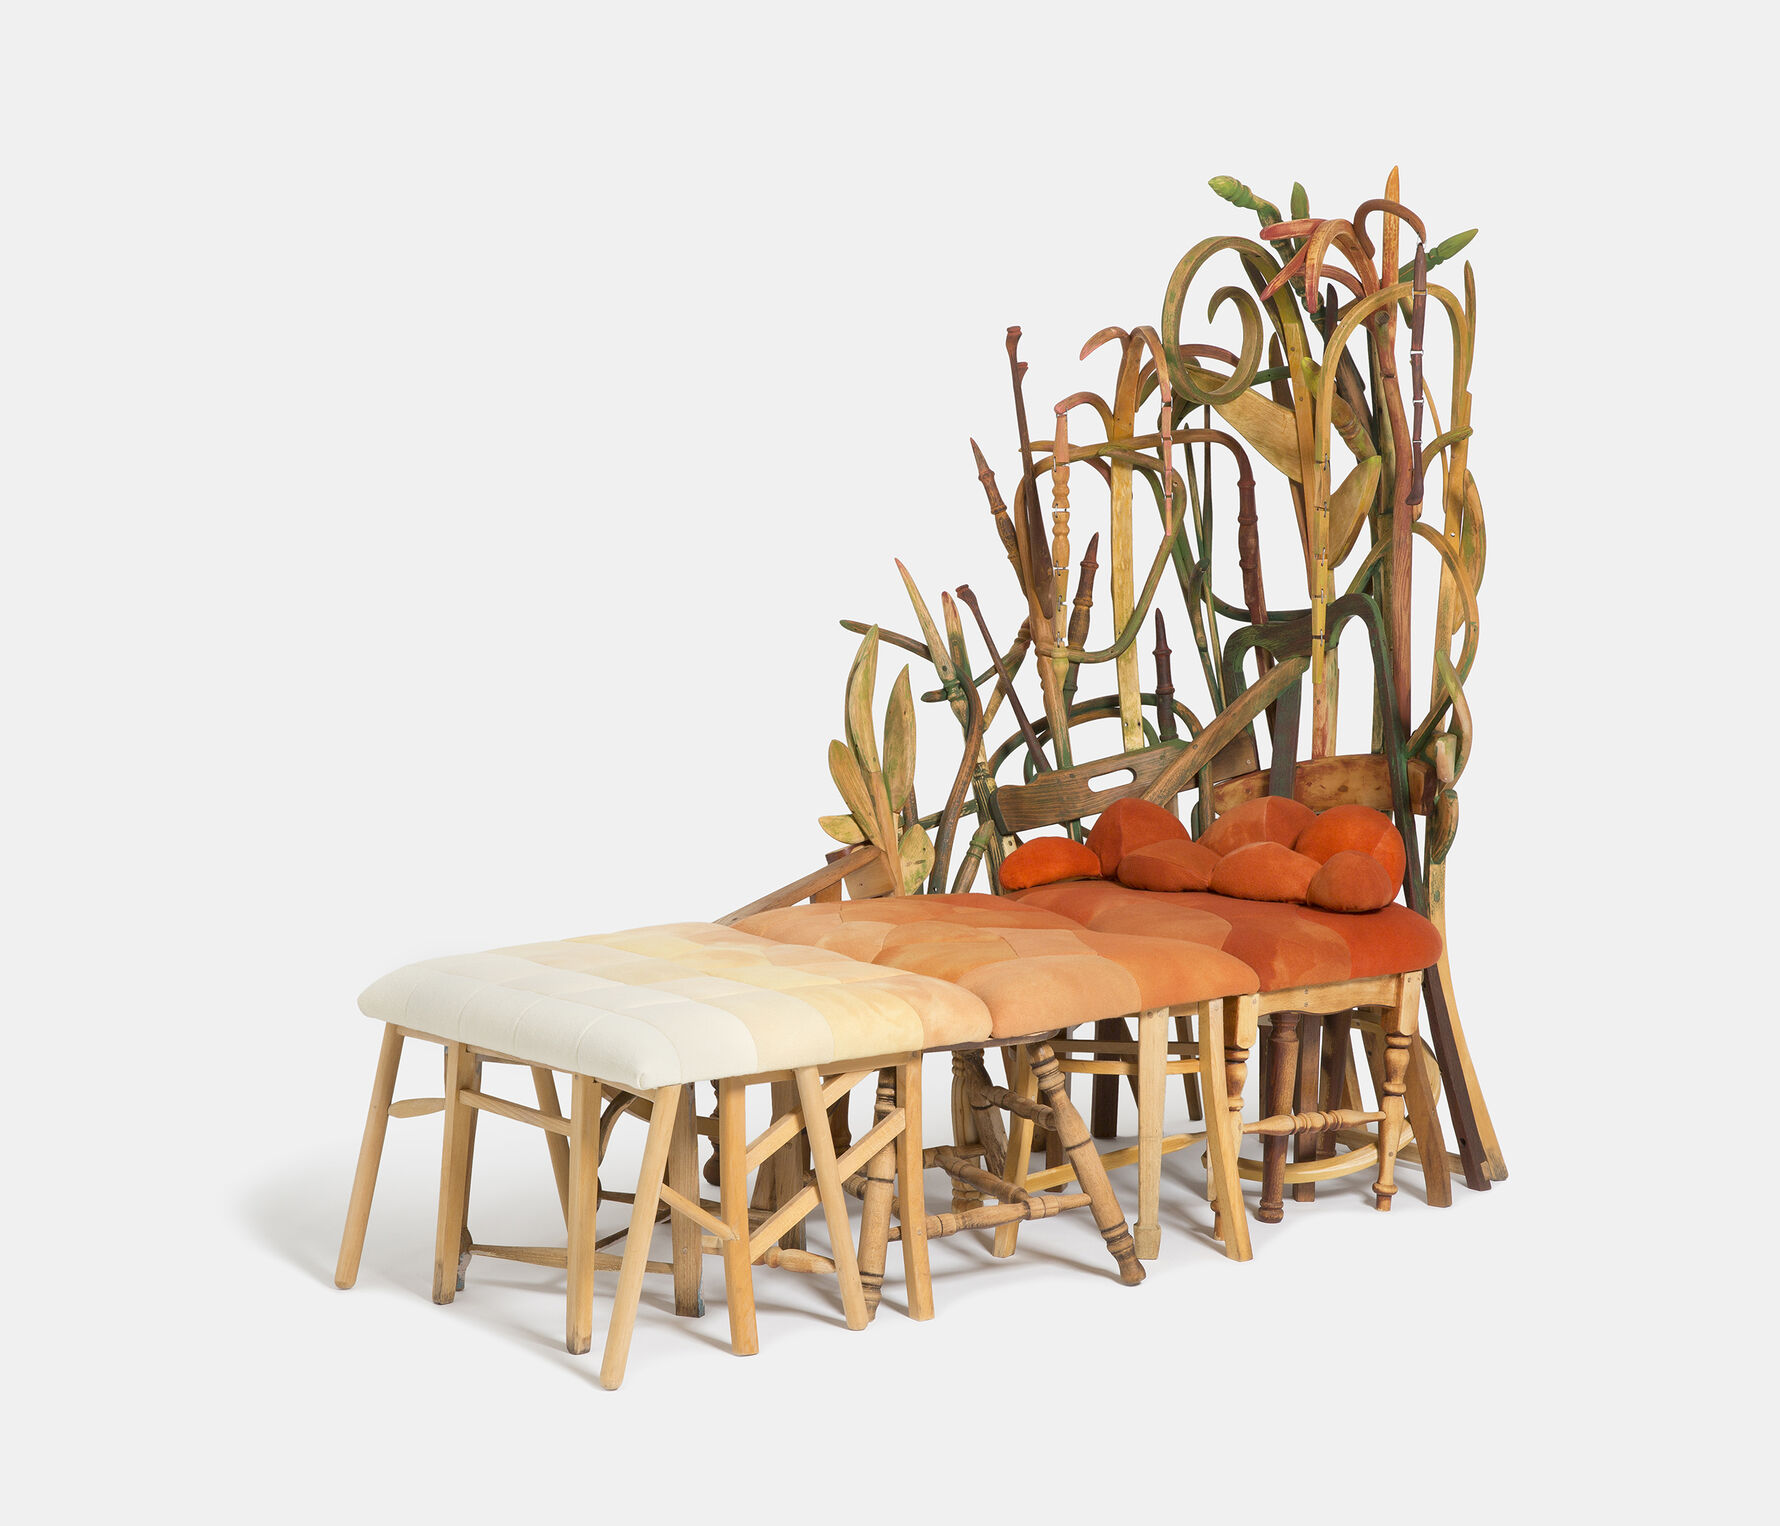 Australian Furniture Design Award 2022 Winning Design